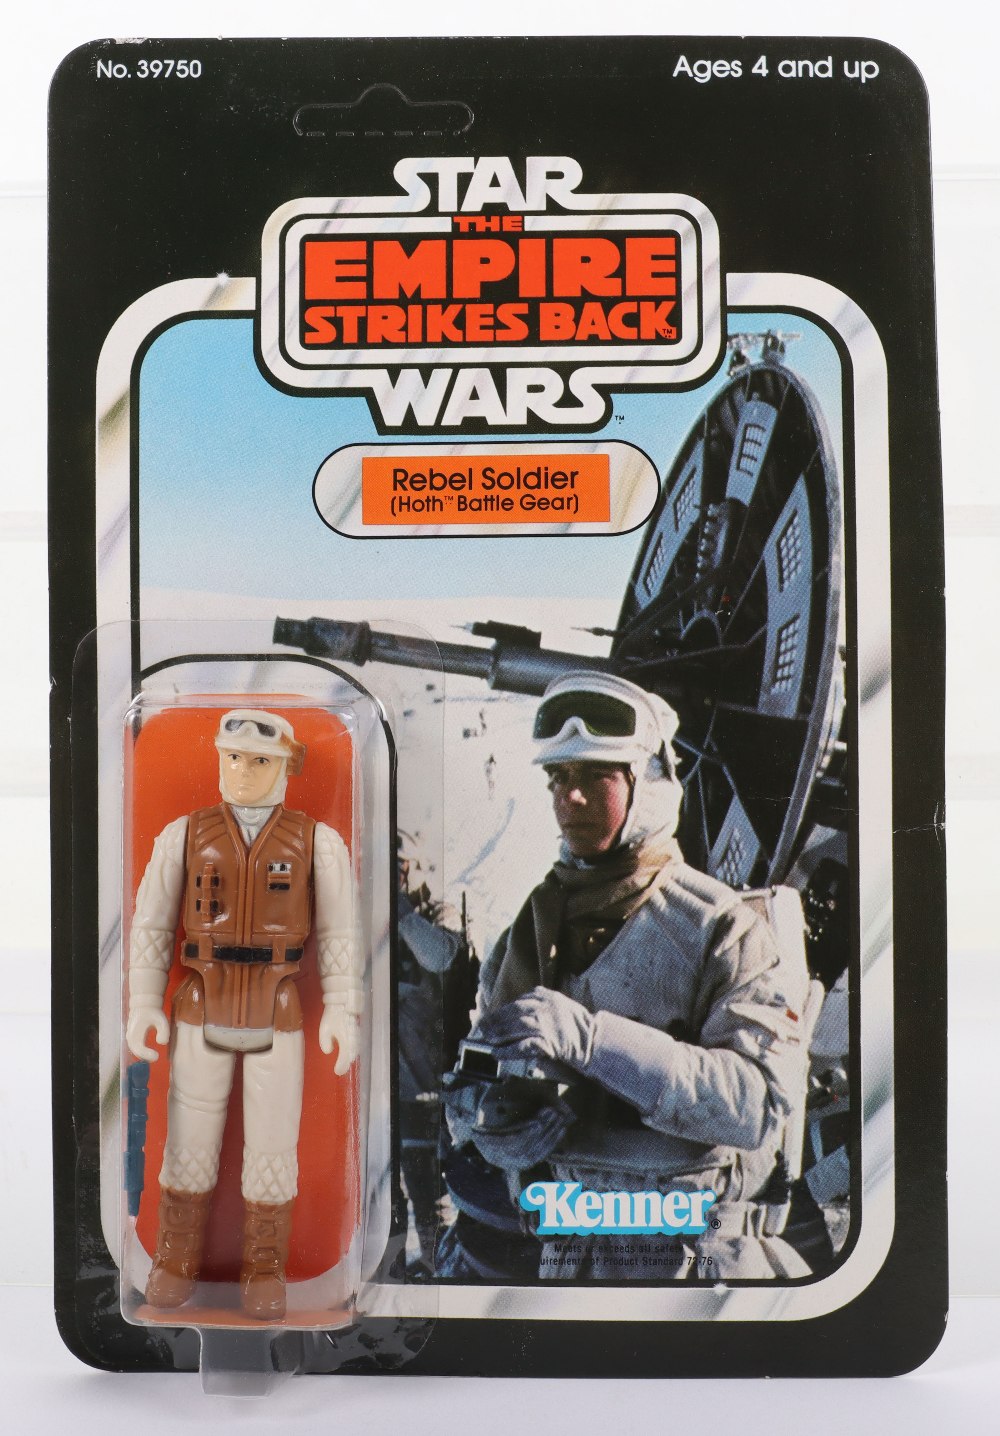 Kenner Star Wars ‘The Empire Strikes Back’ Rebel Soldier (Hoth Battle Gear) Vintage Original Carded